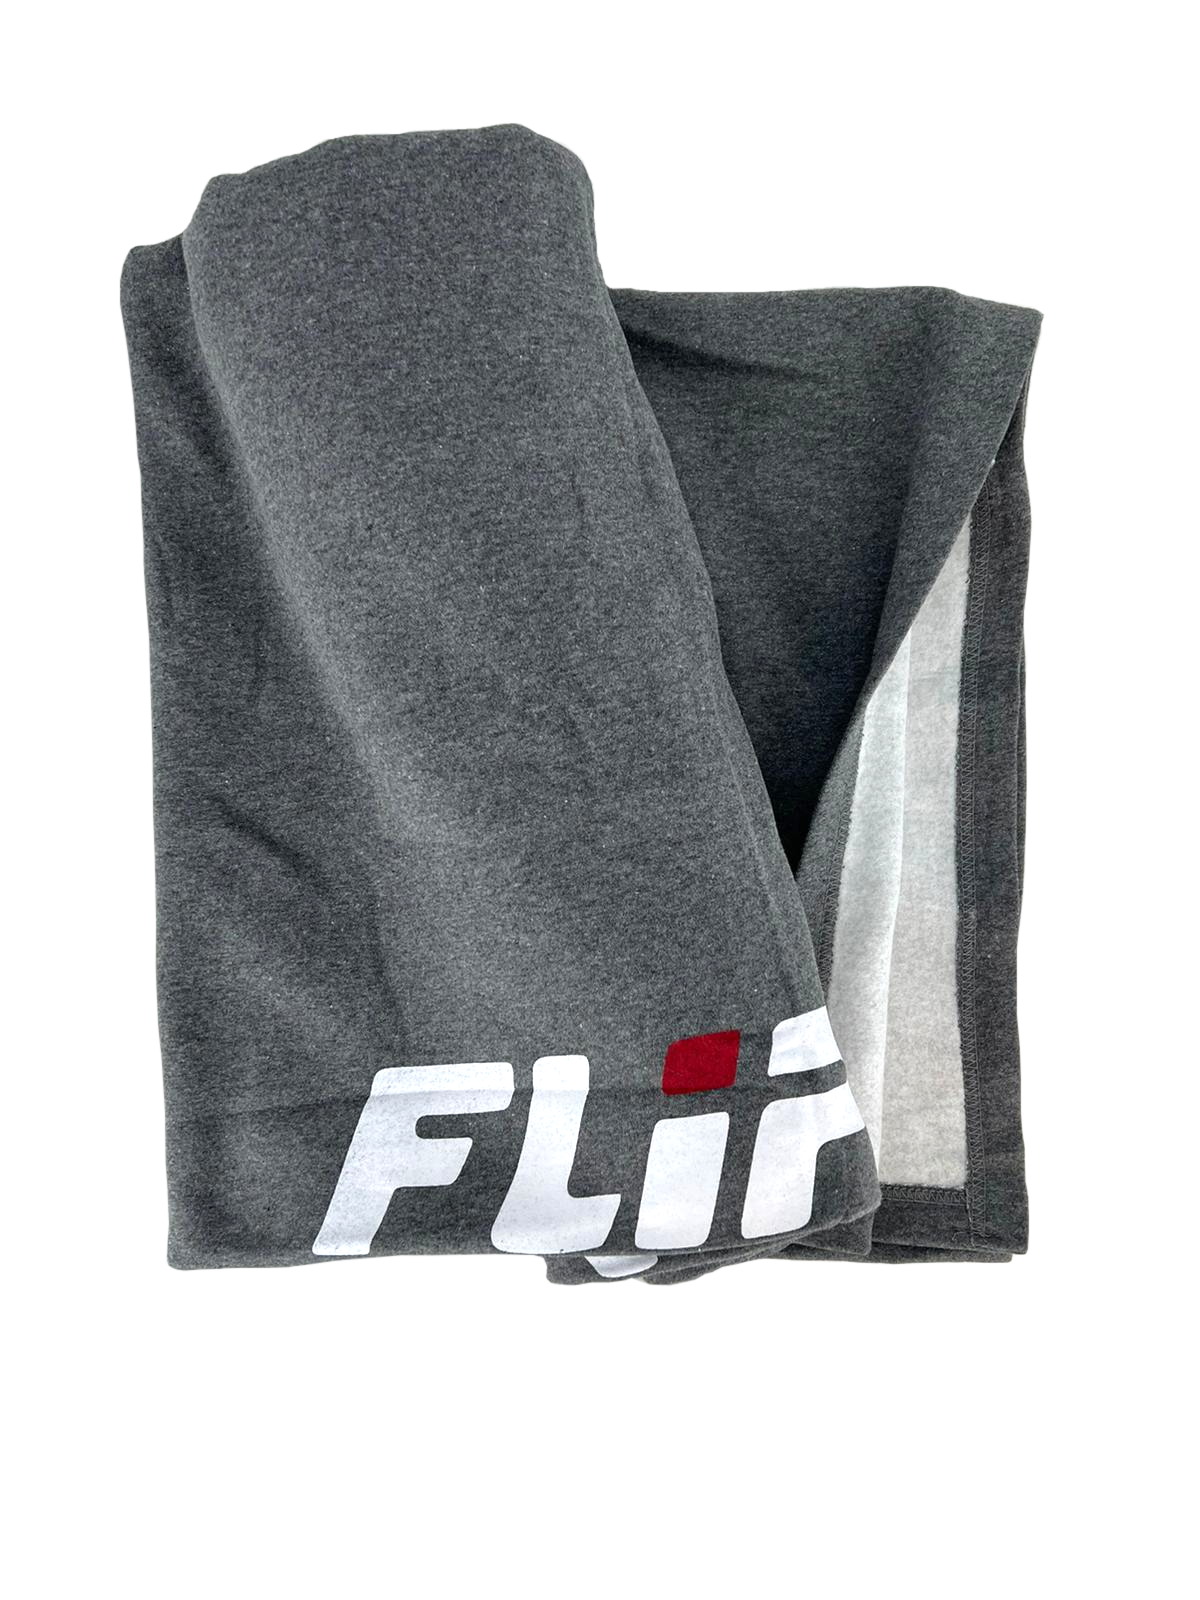 FLIPPER blanket, grey